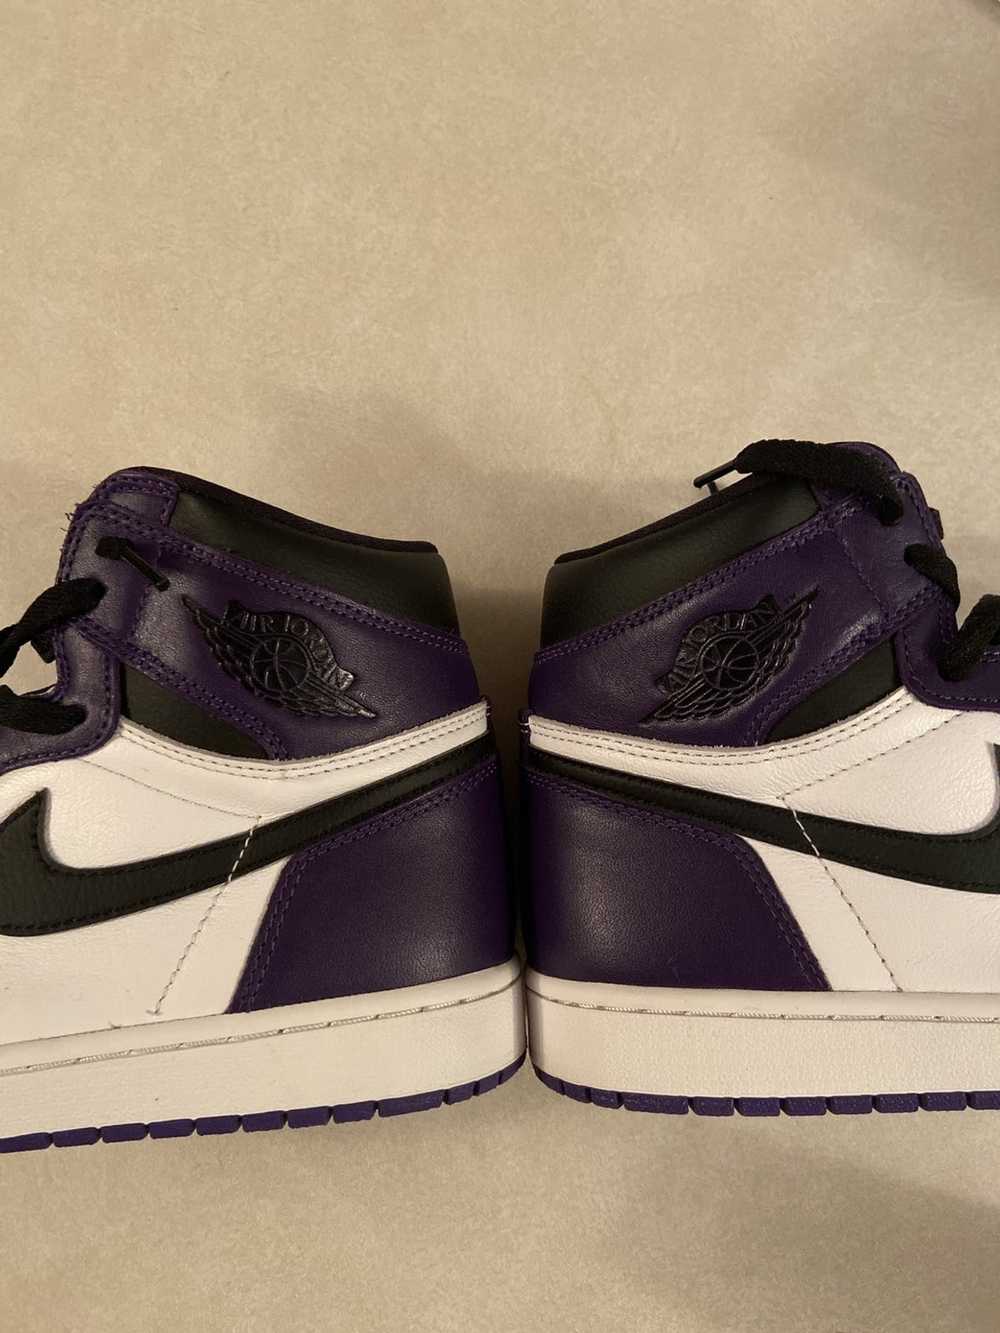 Jordan Brand Court Purple 2.0 - image 7